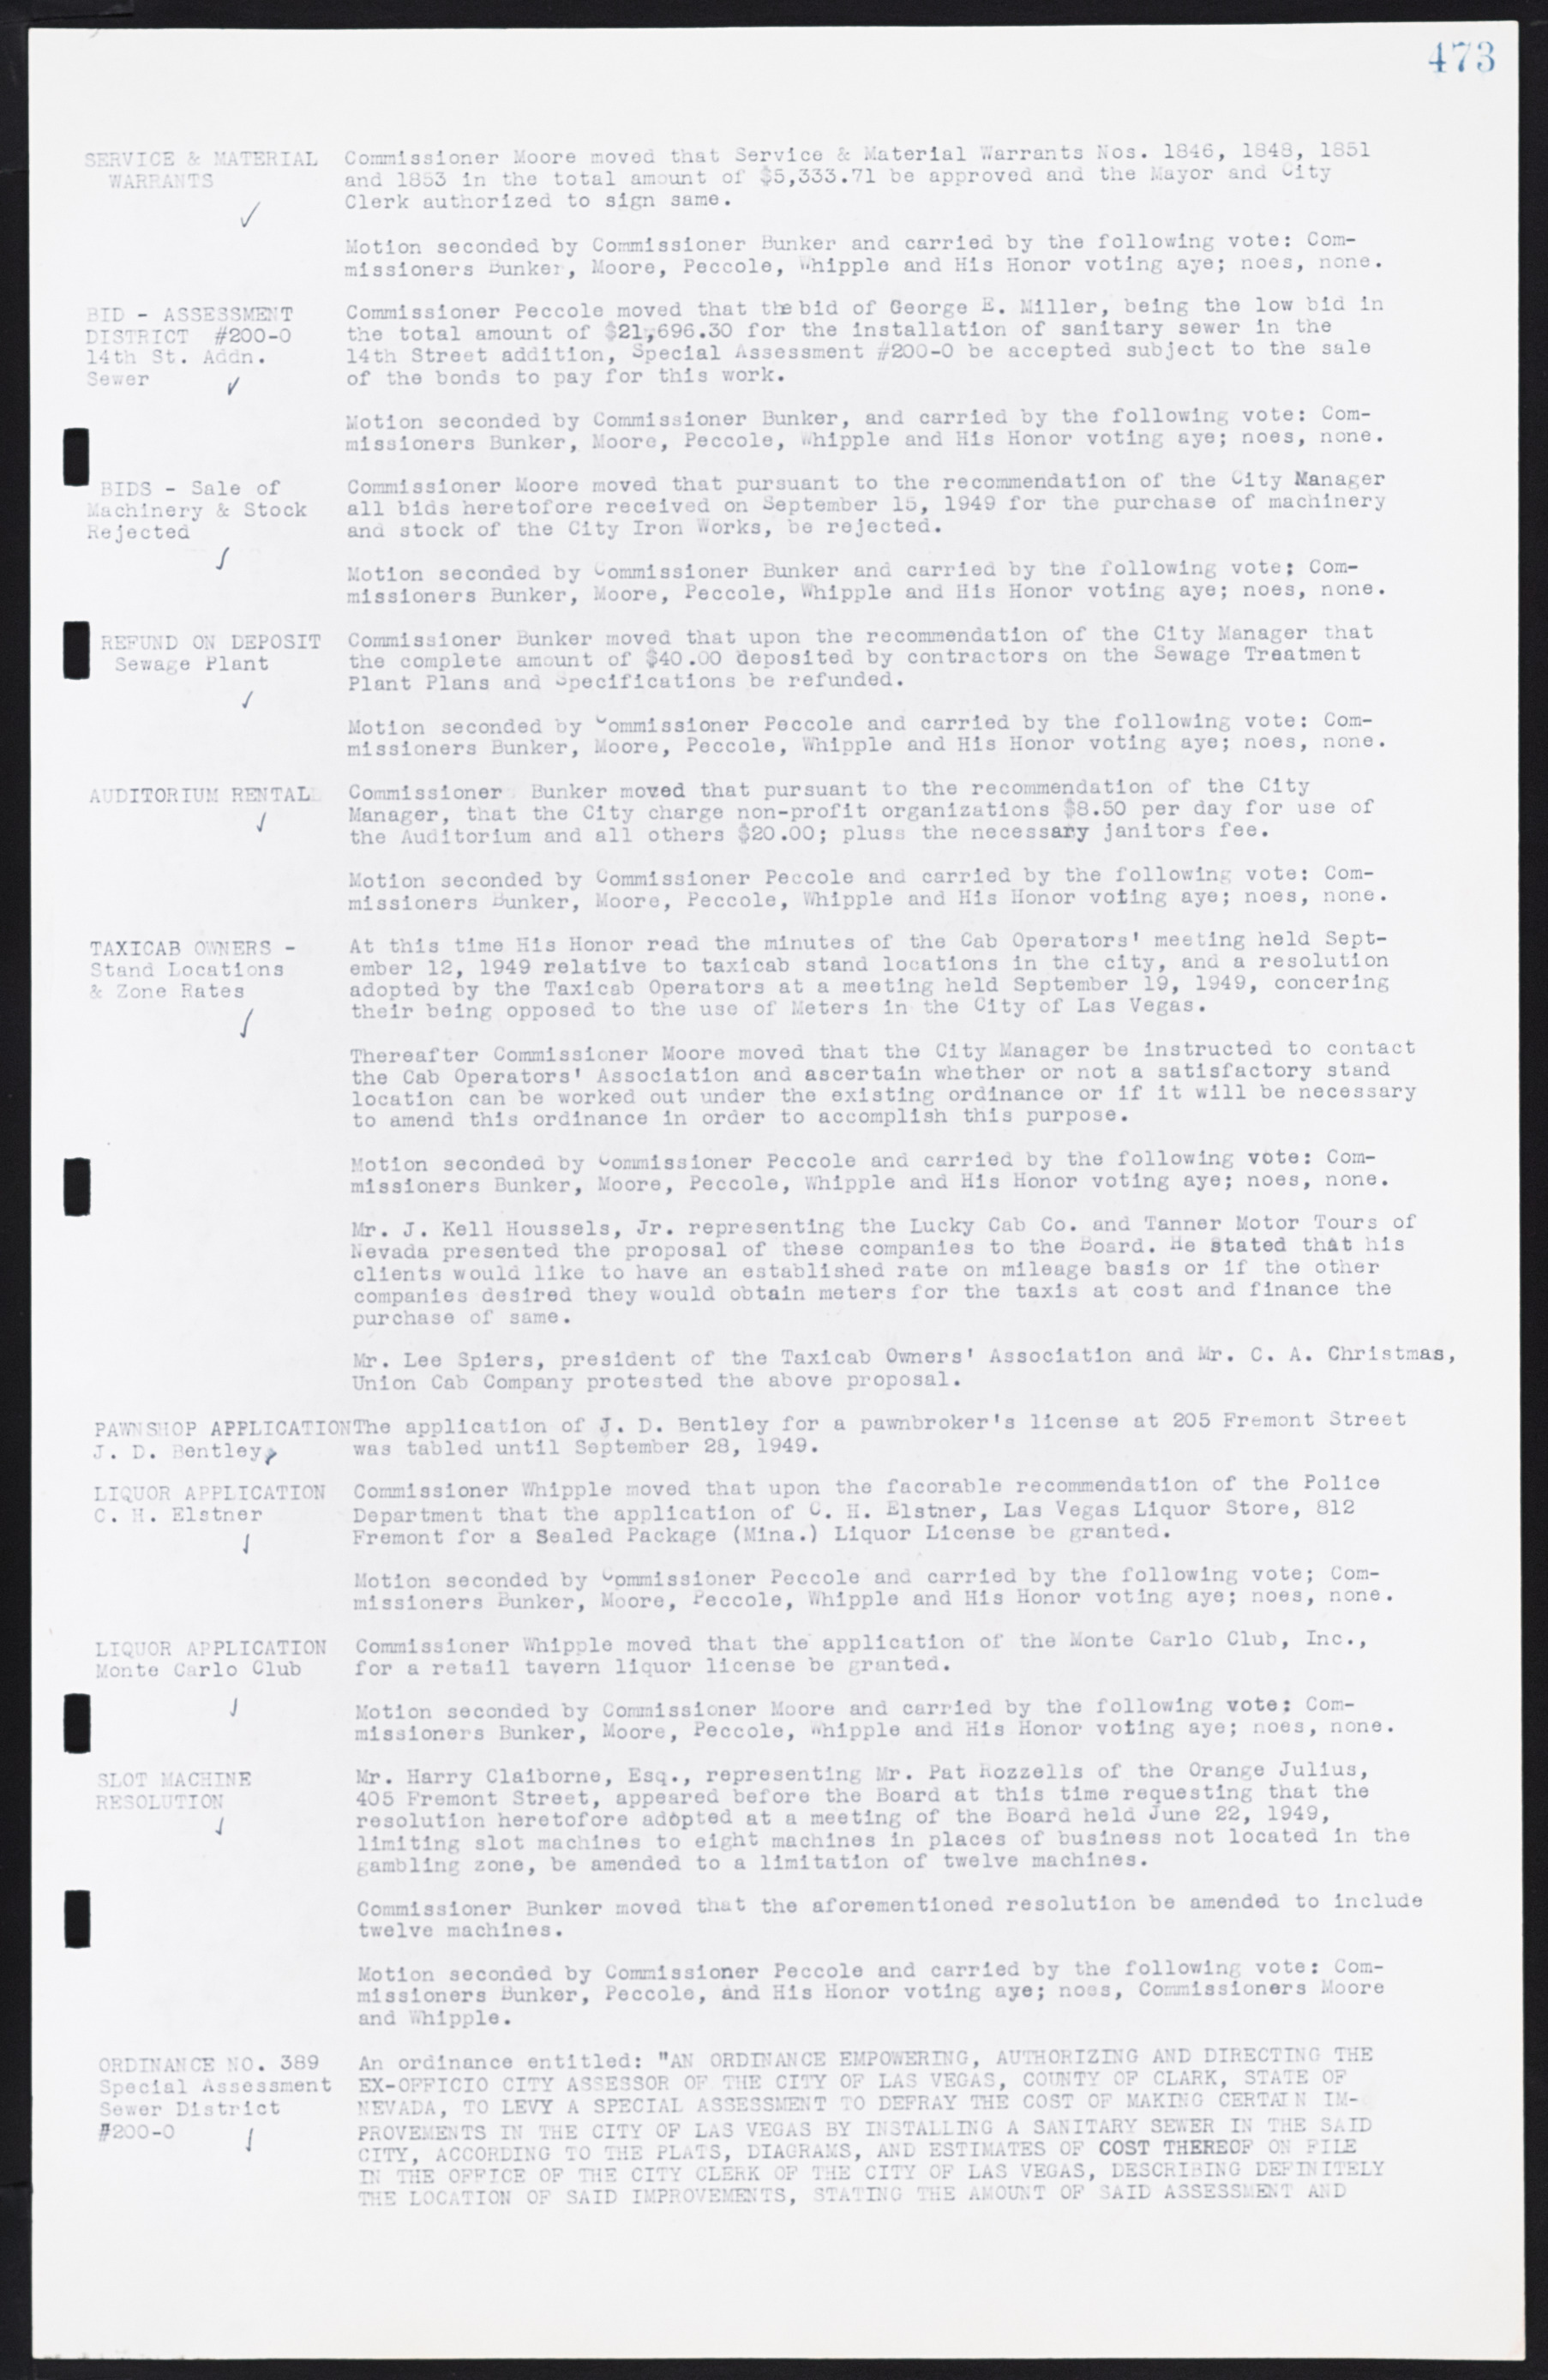 Las Vegas City Commission Minutes, January 7, 1947 to October 26, 1949, lvc000006-505